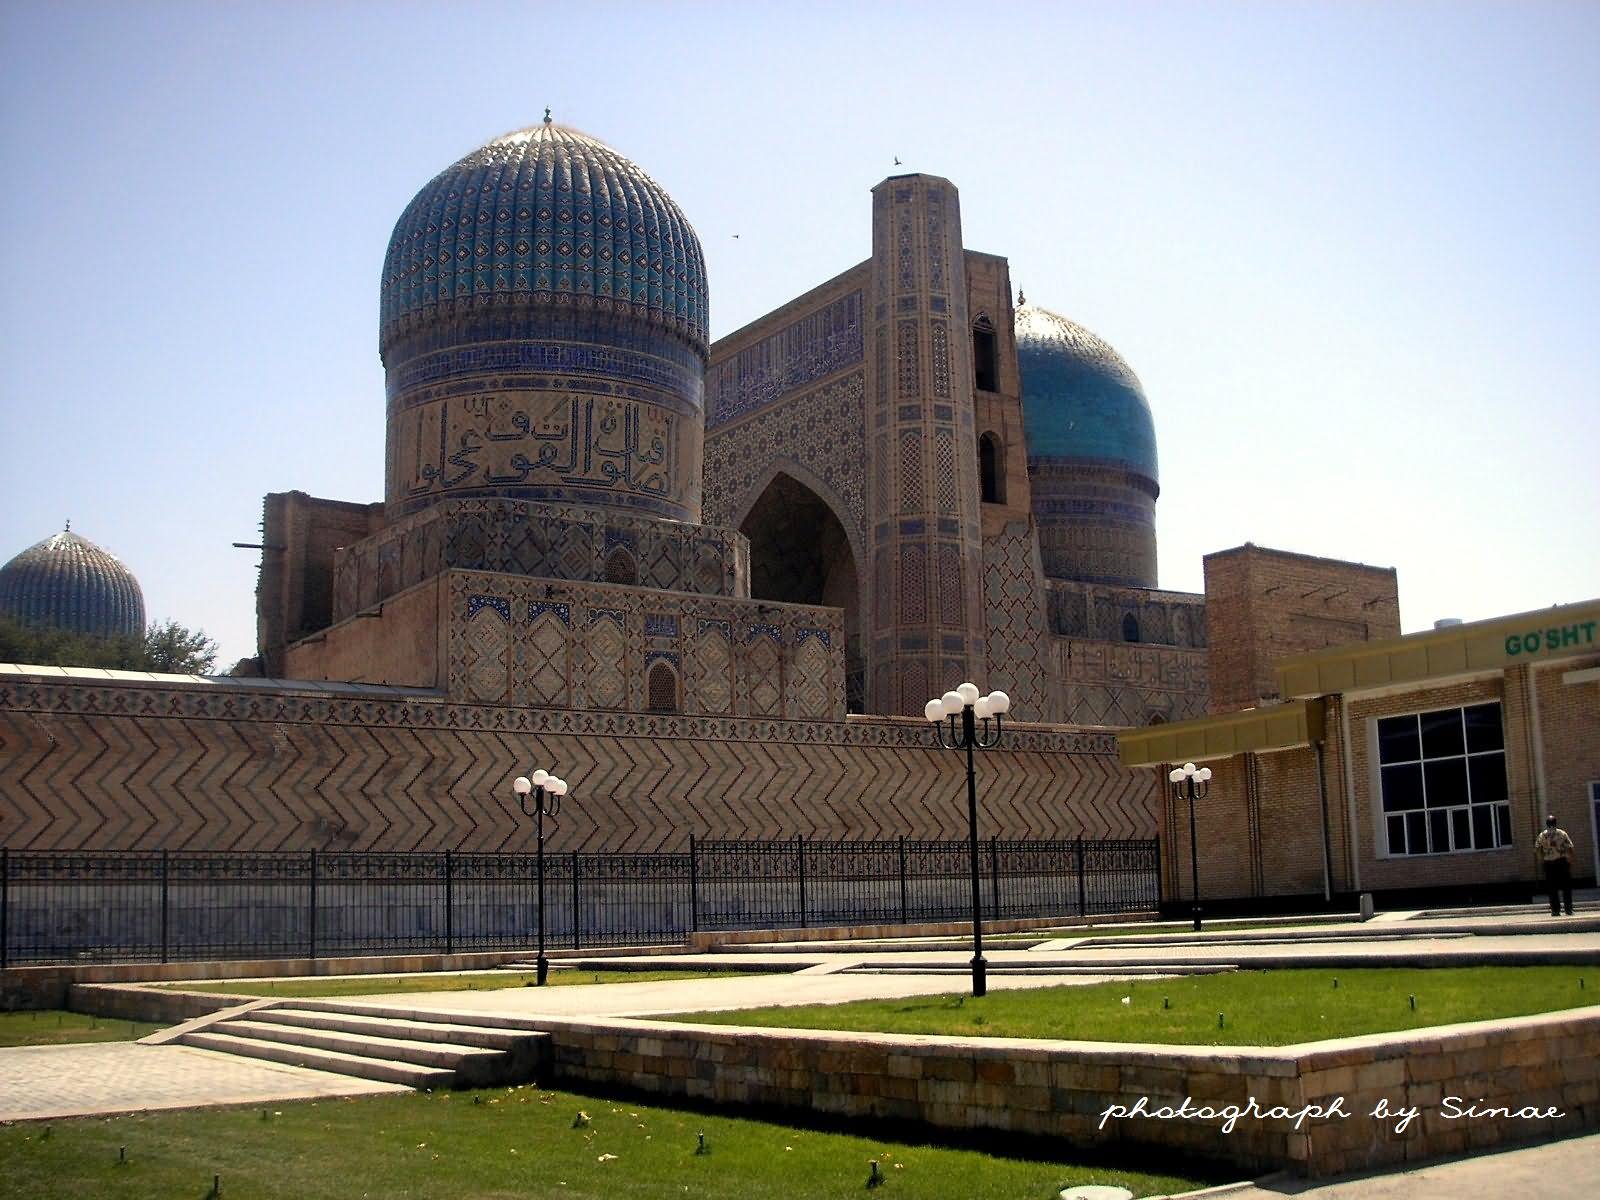 Courtyard Of The Bibi-Khanym Mosque In Uzbekistan